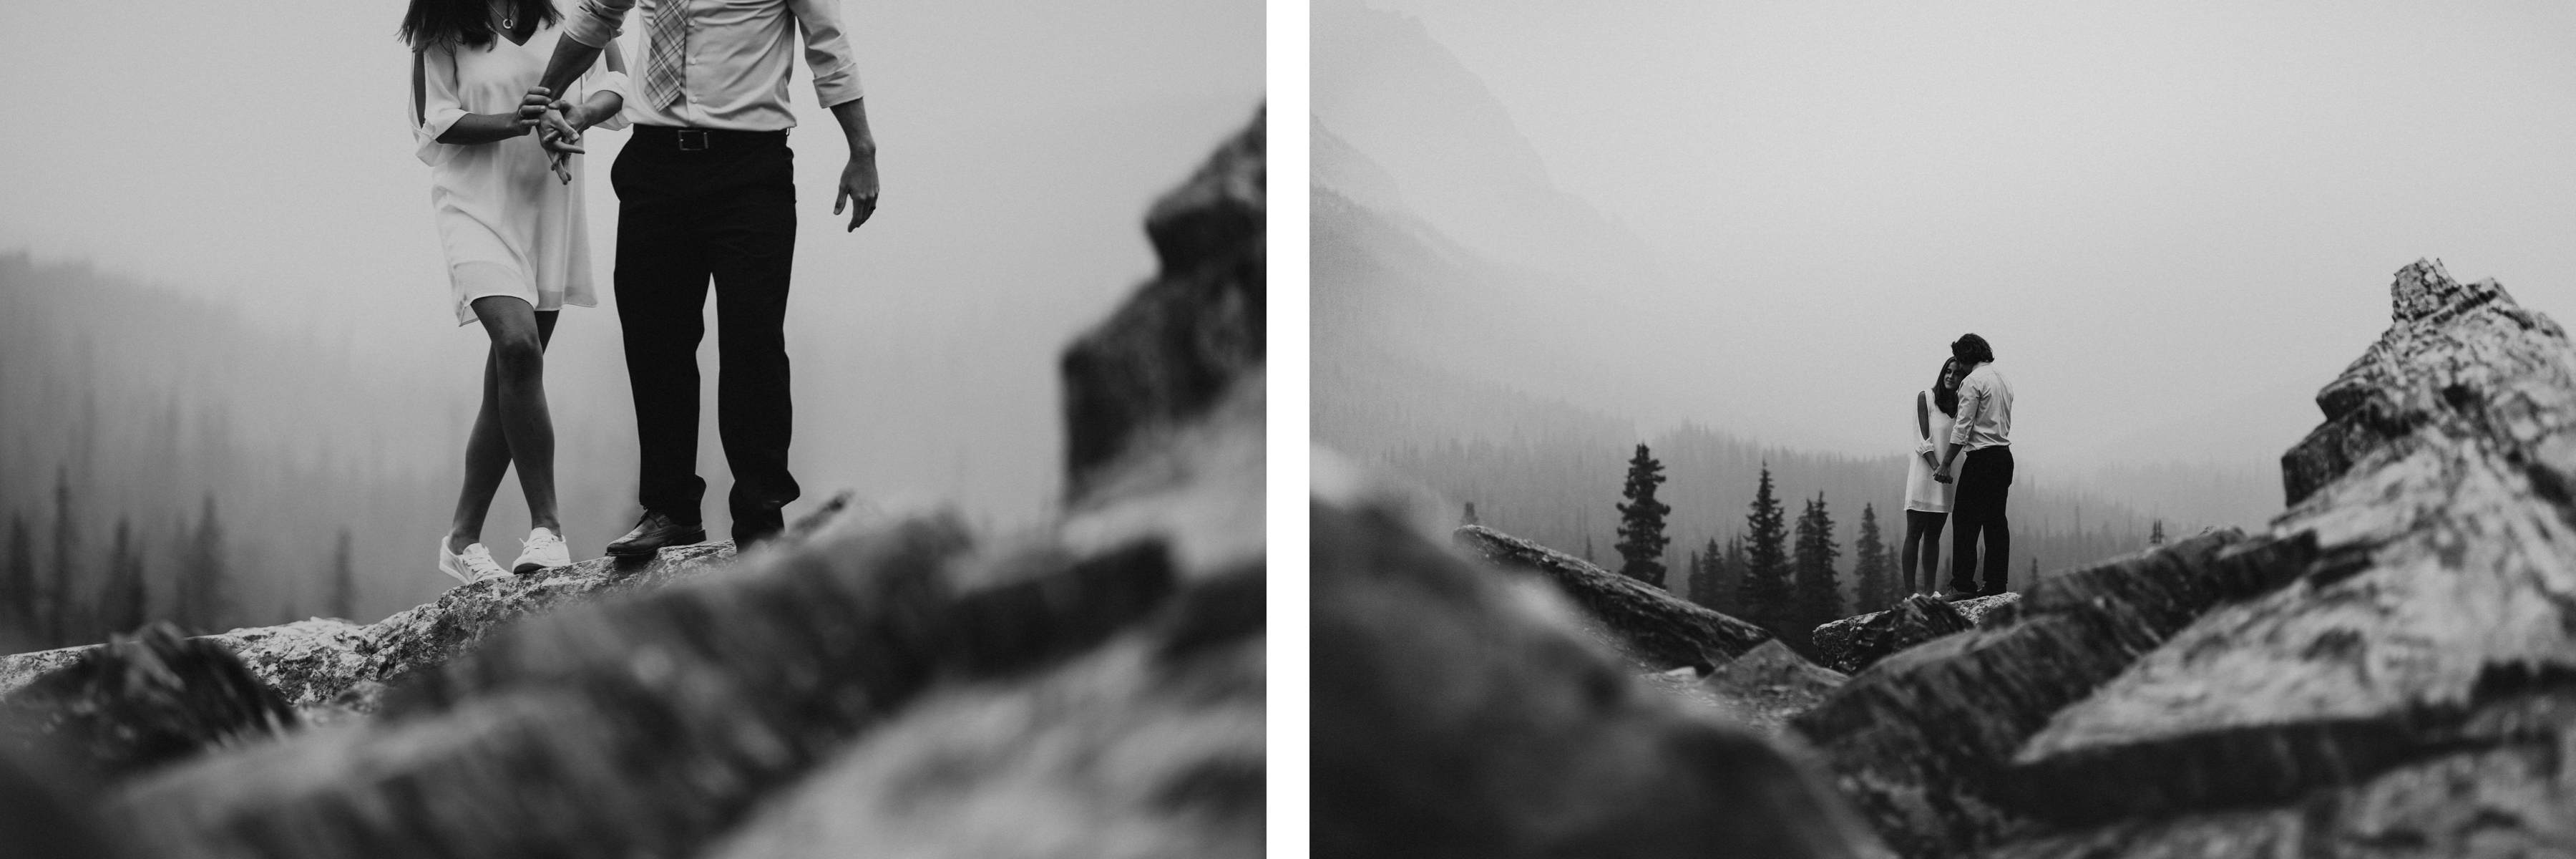 Adventure Elopement Photographers in Banff National Park - Image 13